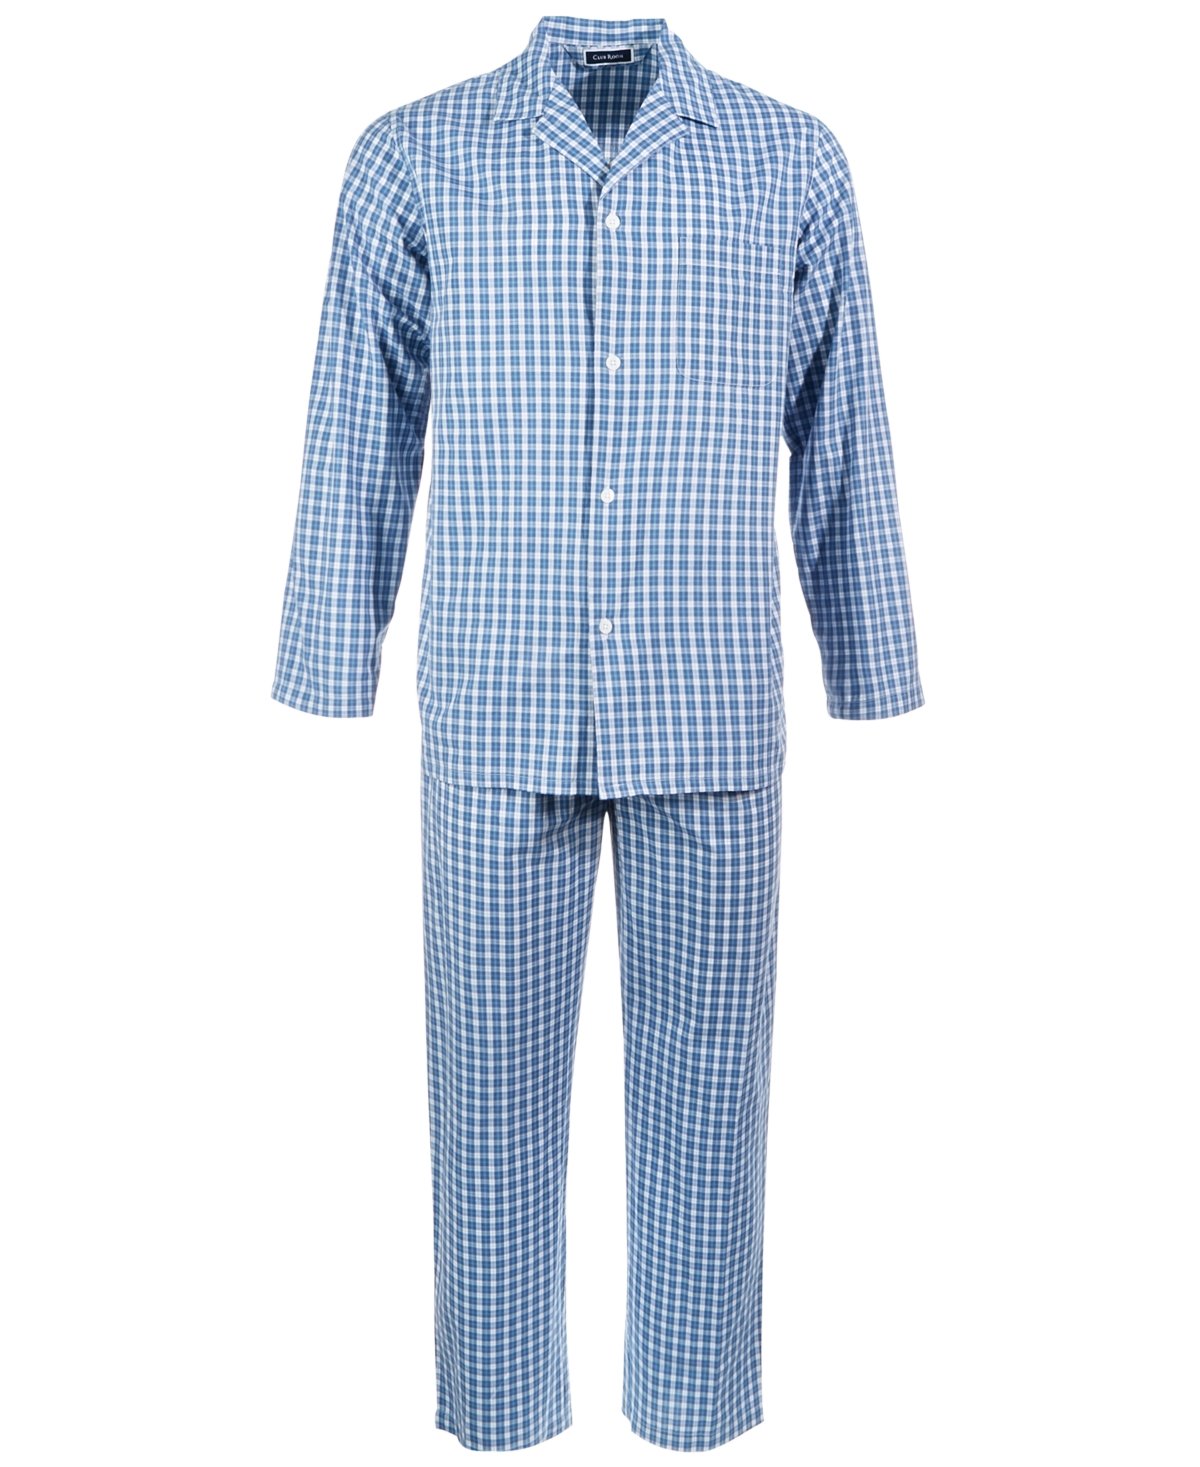 Men's Small Window Plaid Pajama Set, Created for Macy's - Blue White